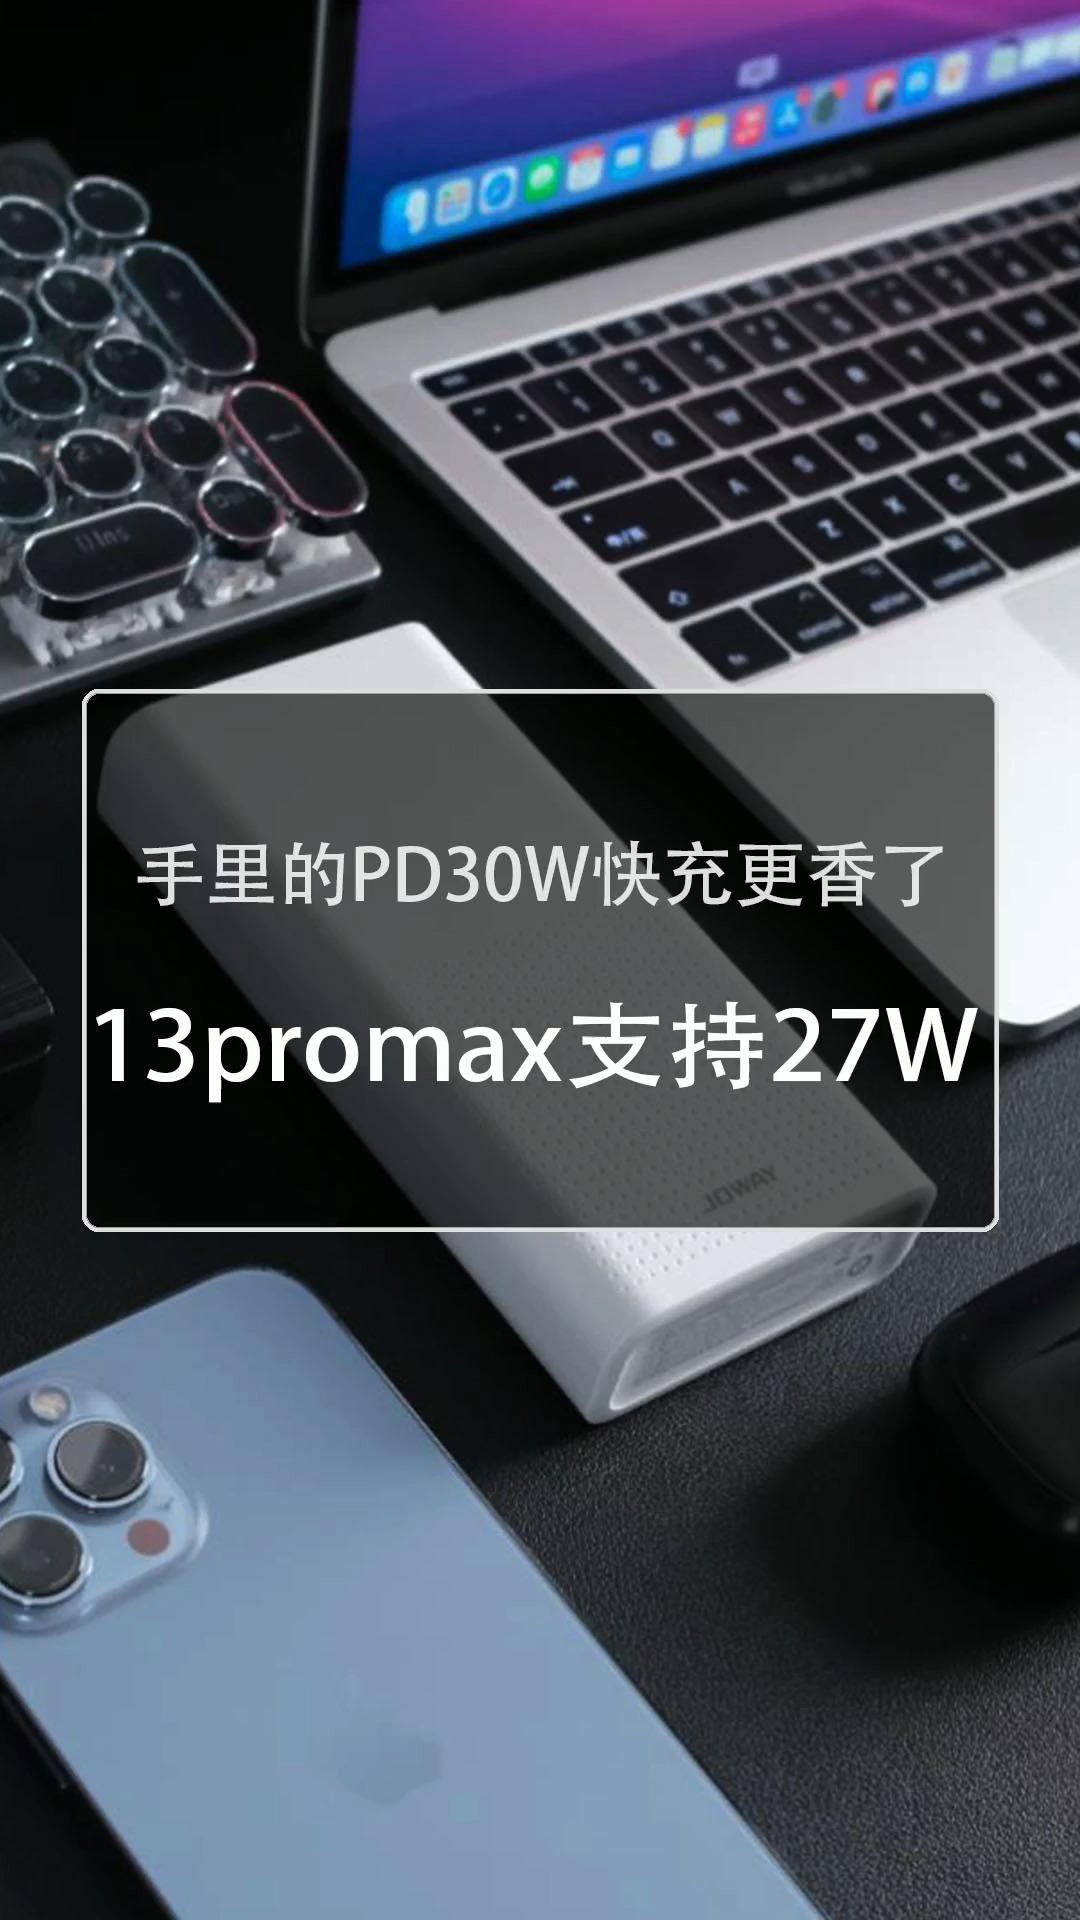 Iphone 13 Pro Max快充配件推荐 知乎 2263